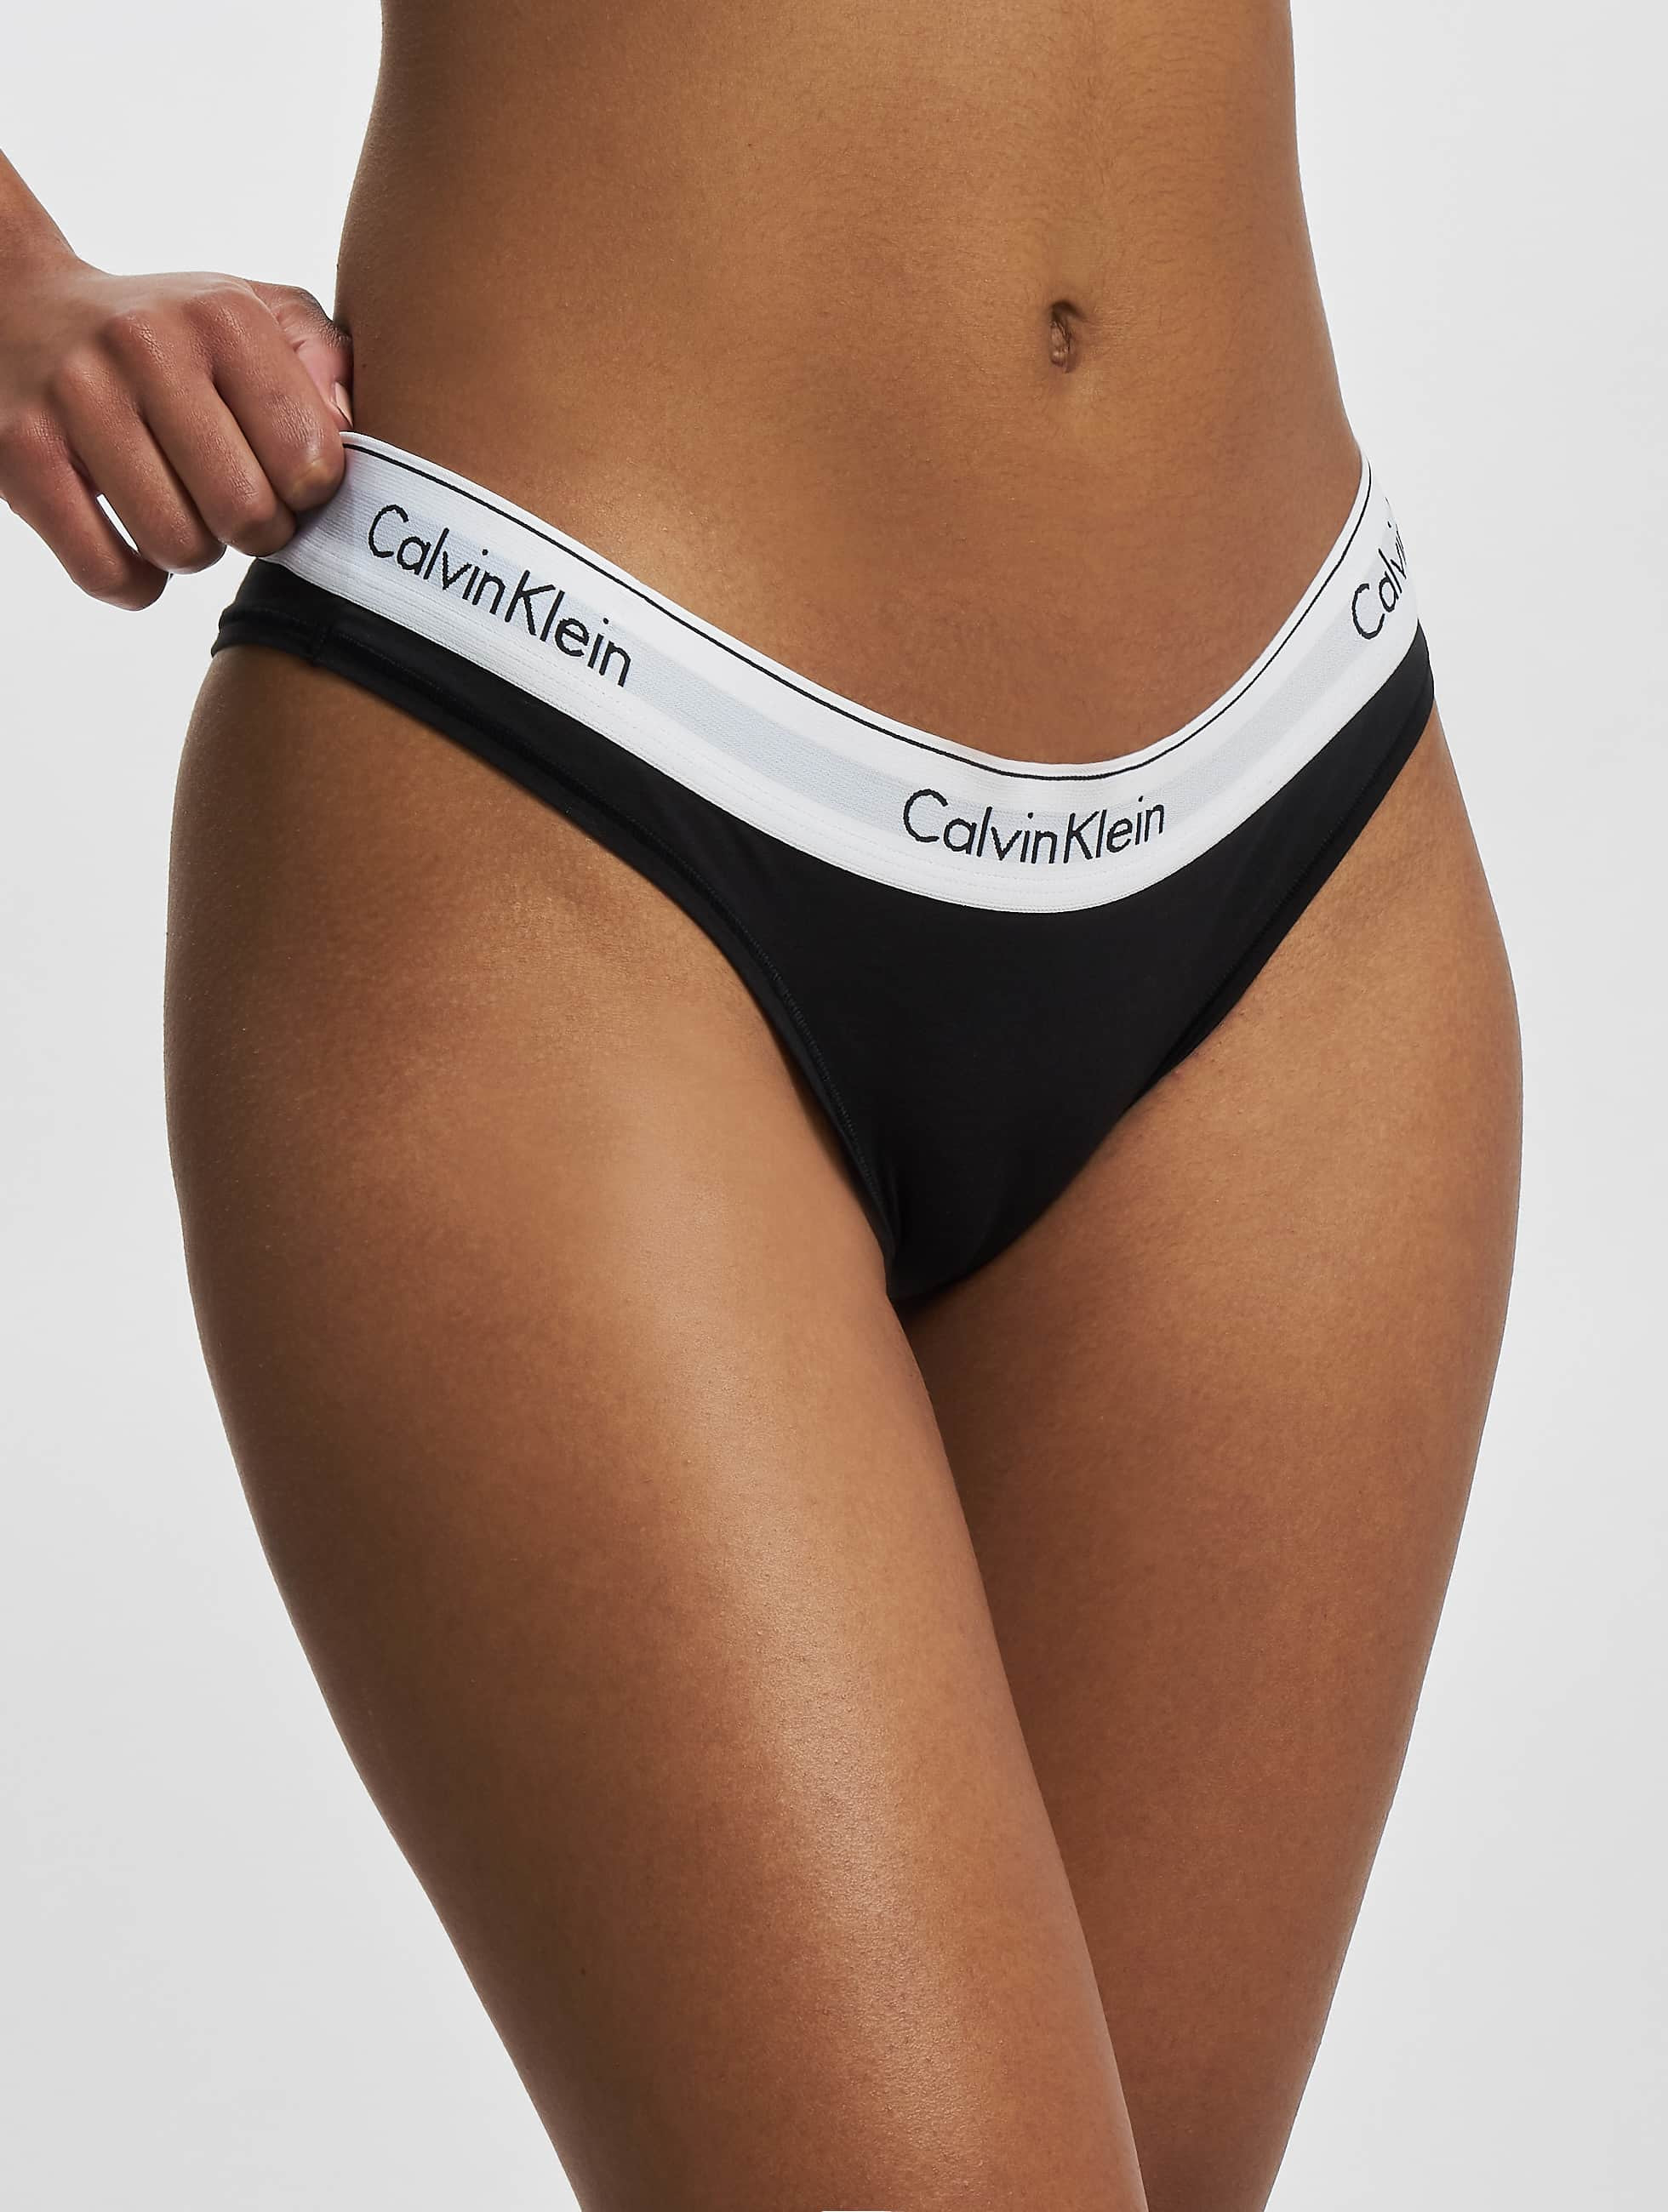 Calvin Klein Underwear / Beachwear / Underwear Underwear Brazilian in black  972280